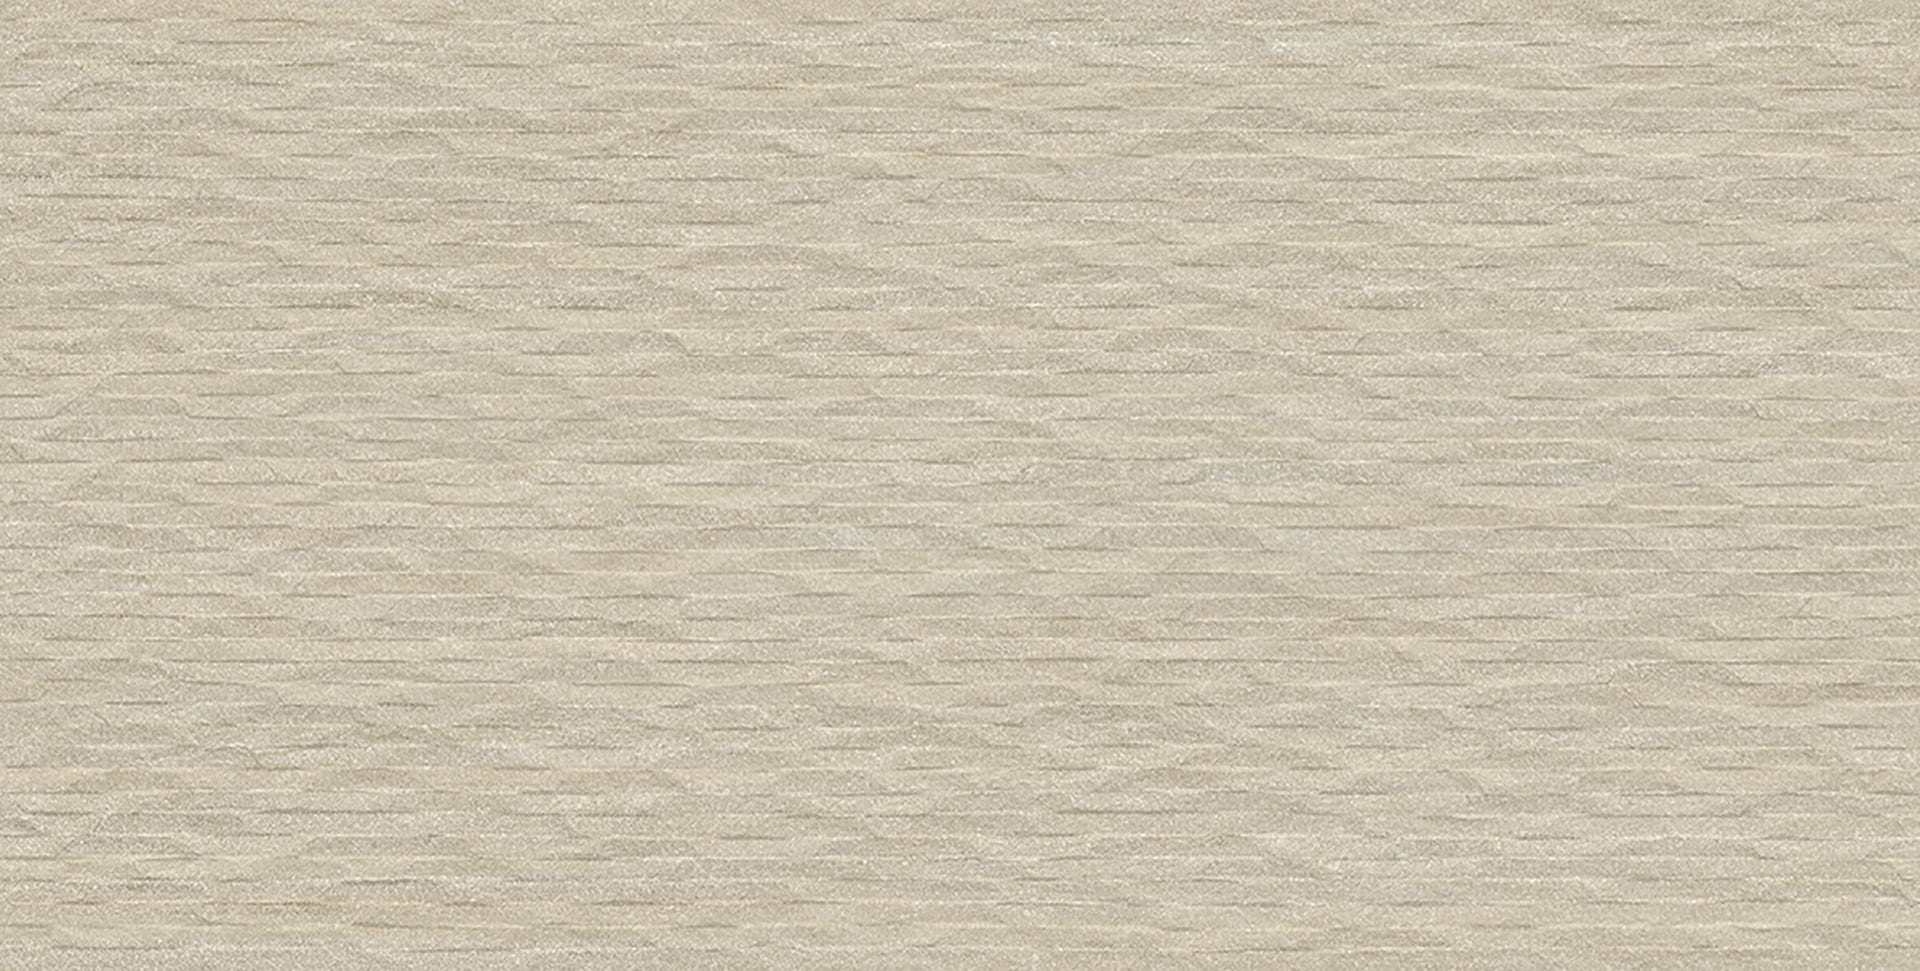 Elegance Pro: Mural Sand Wall Tile (24"x48"x9.5-mm | matte)